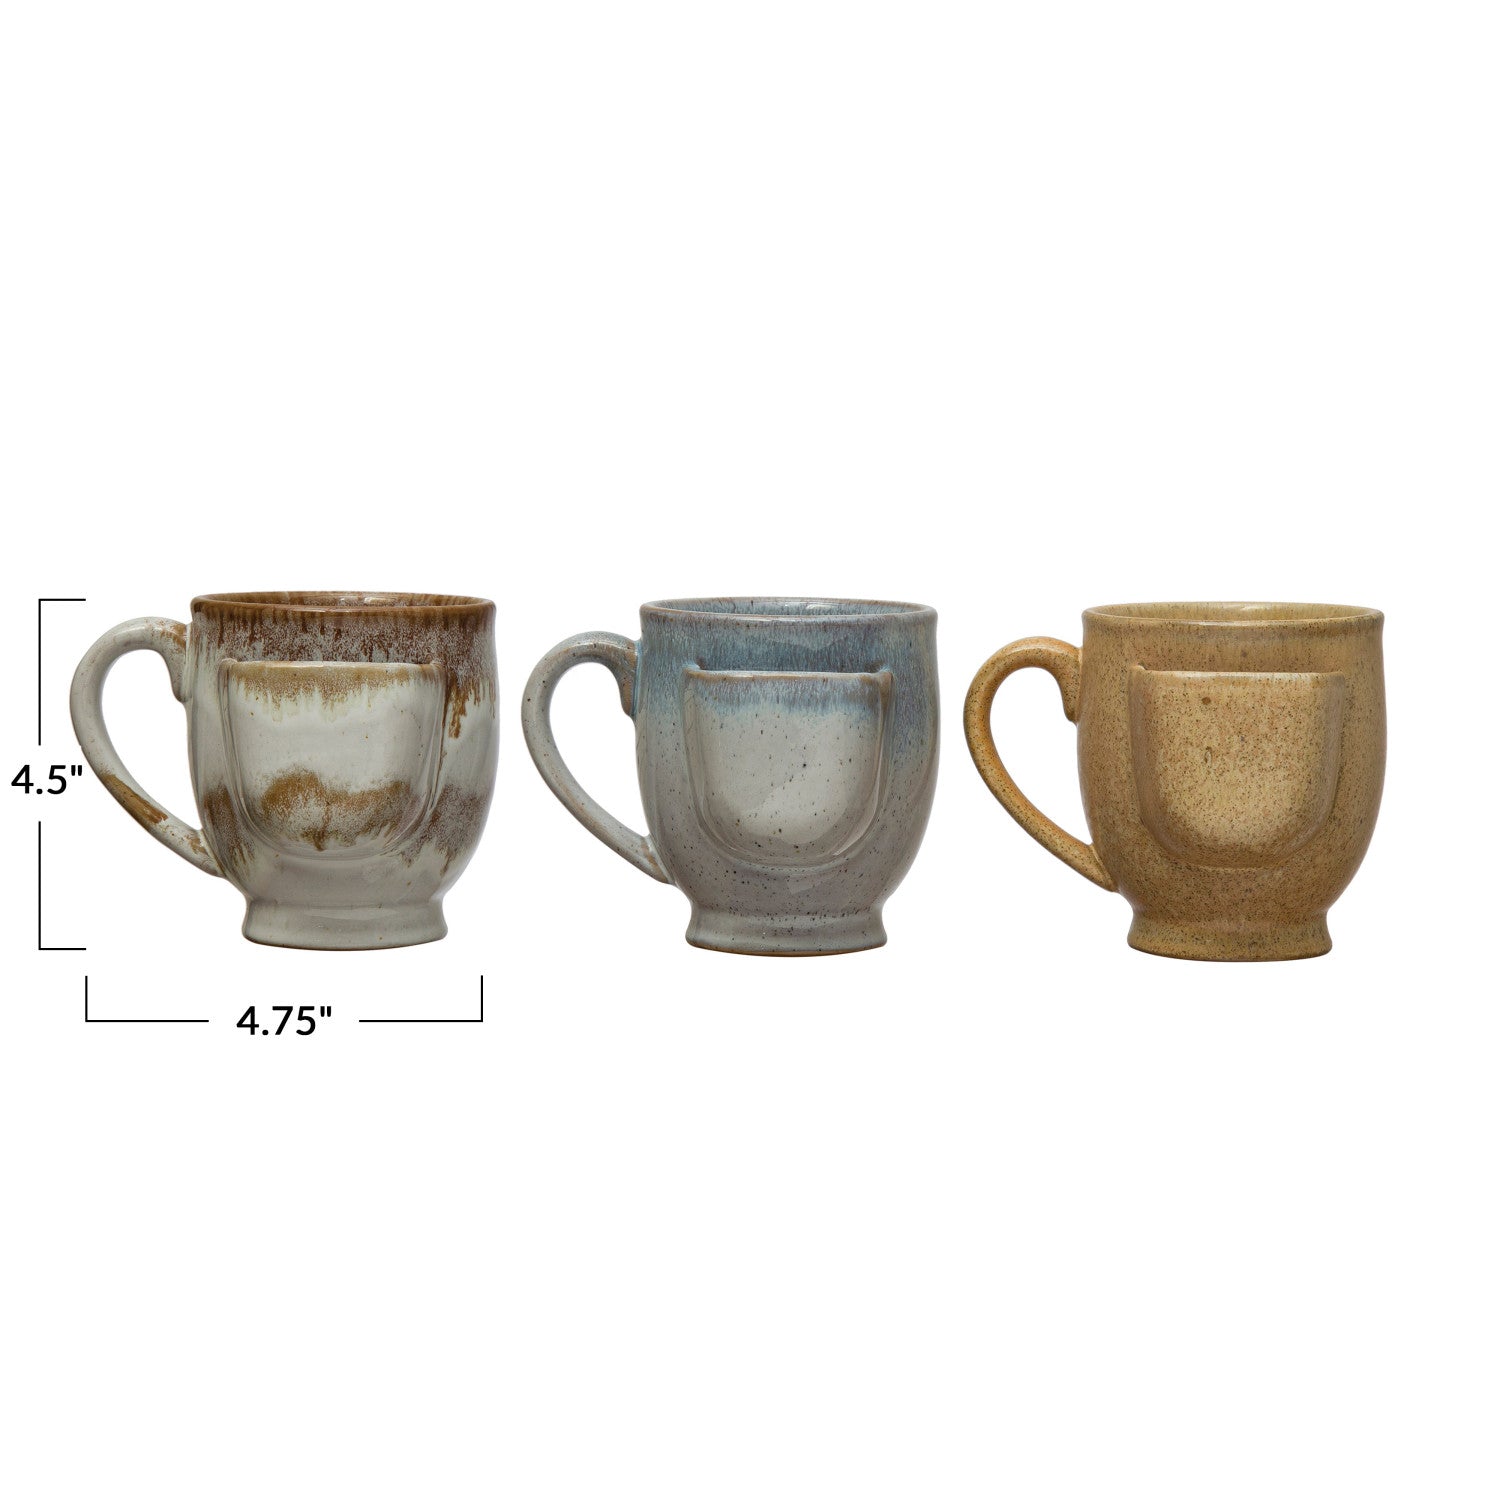 12 oz. Stoneware Mug w/ Tea Bag Holder, Reactive Glaze